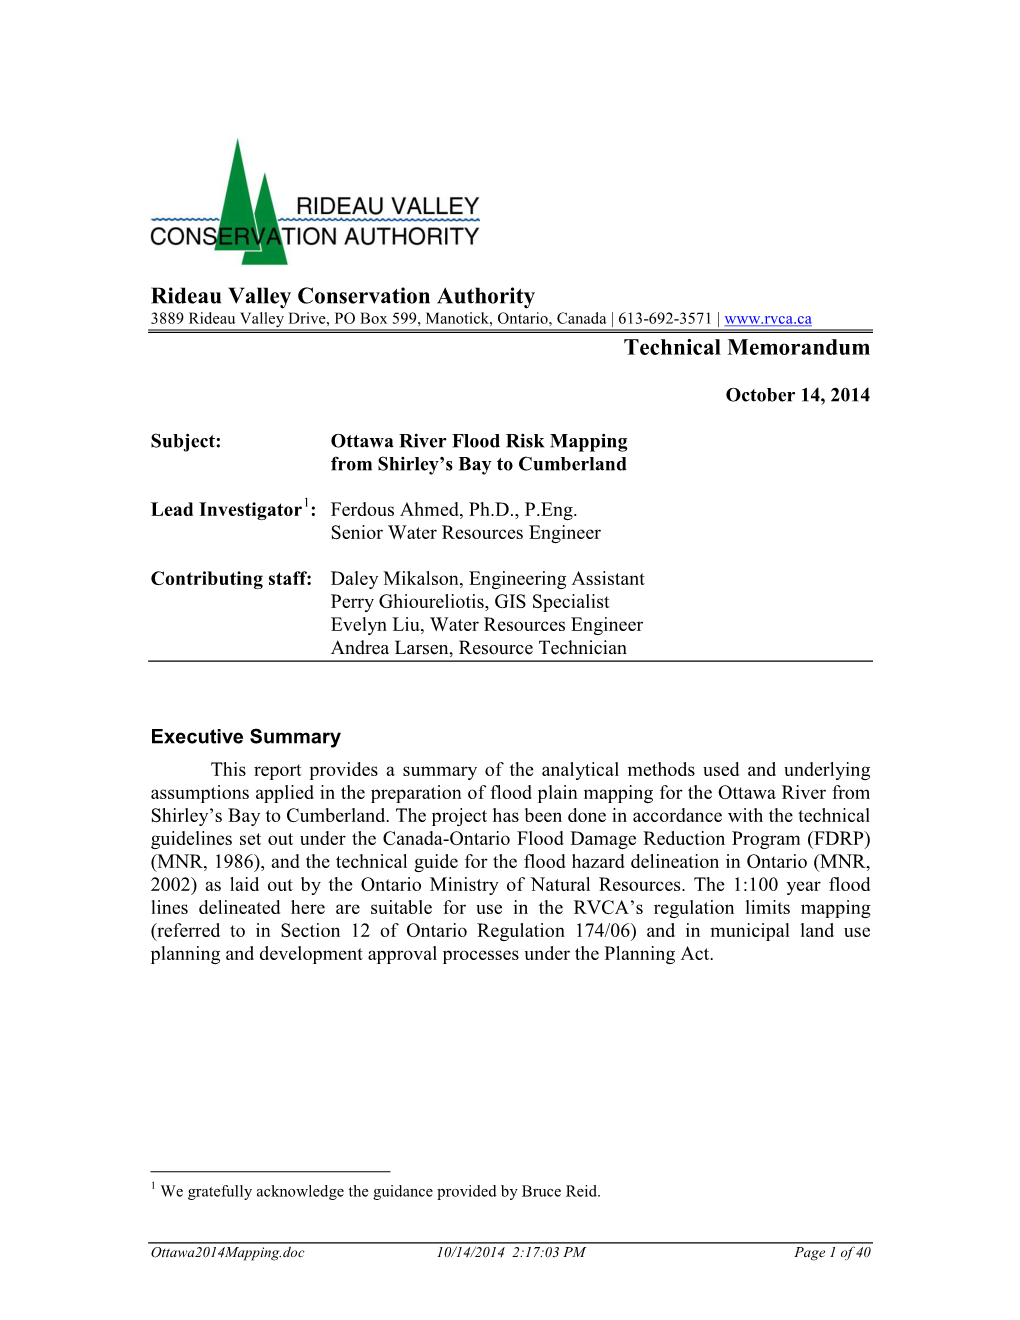 Rideau Valley Conservation Authority Technical Memorandum